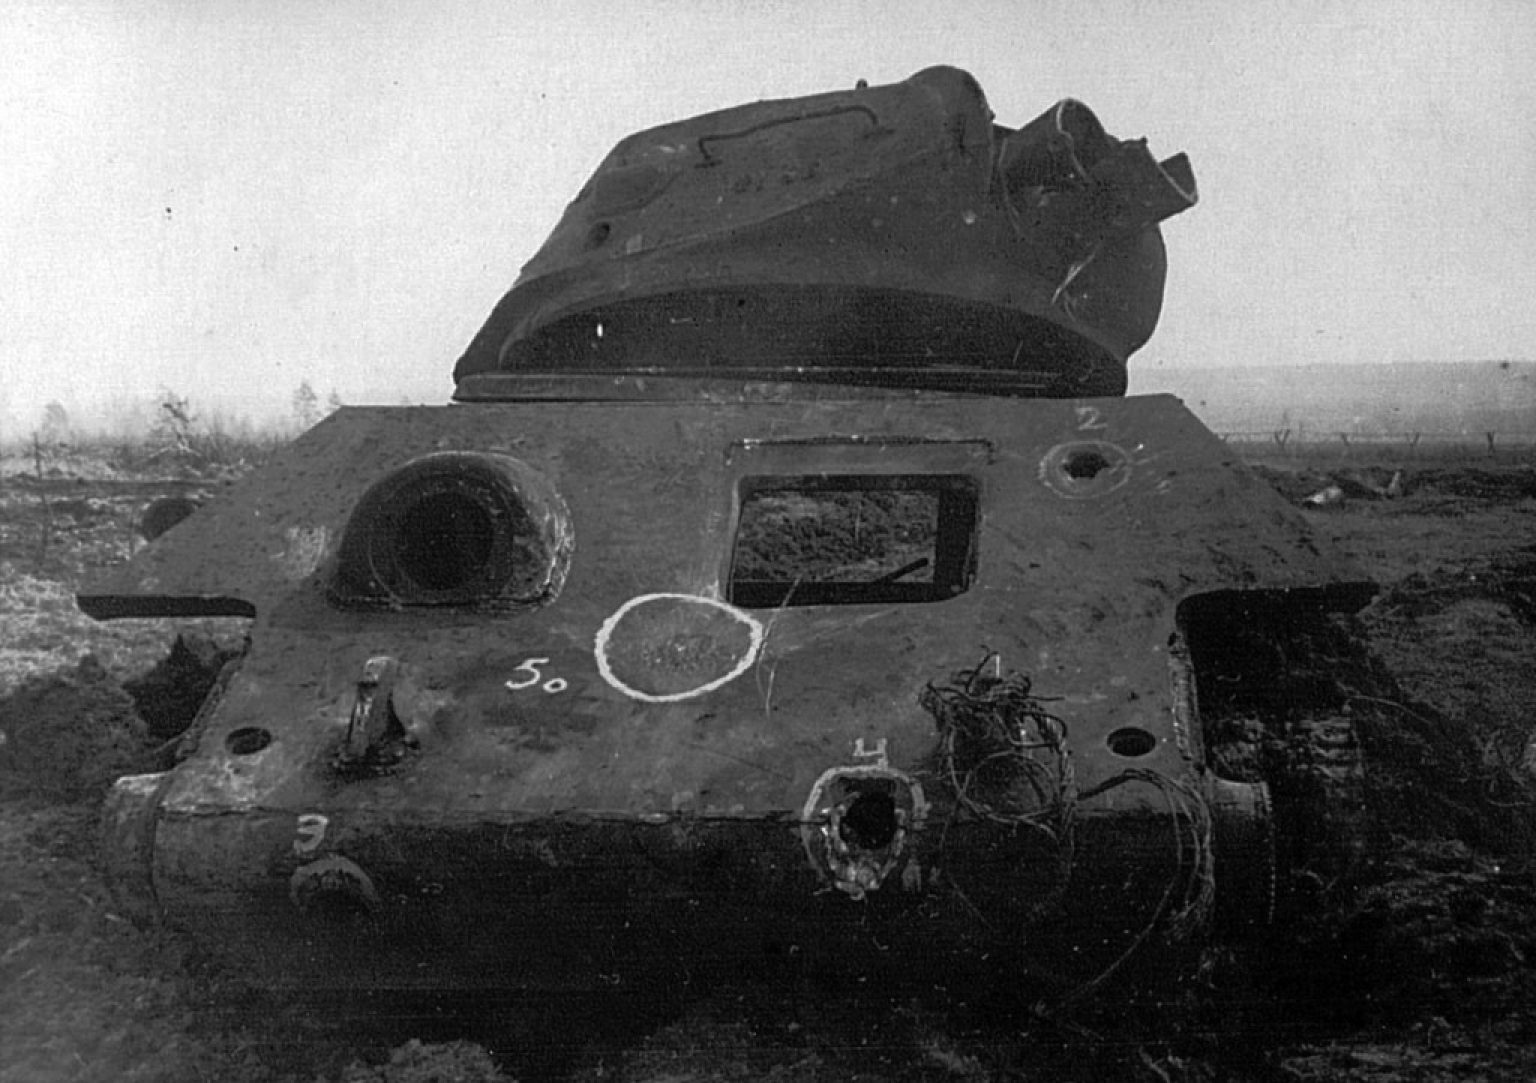 Лоб танка. Т-34 С 88 мм пушкой KWK 36l/36. Т 34 после попадания снаряда тигра. Брони пробитие кв1.